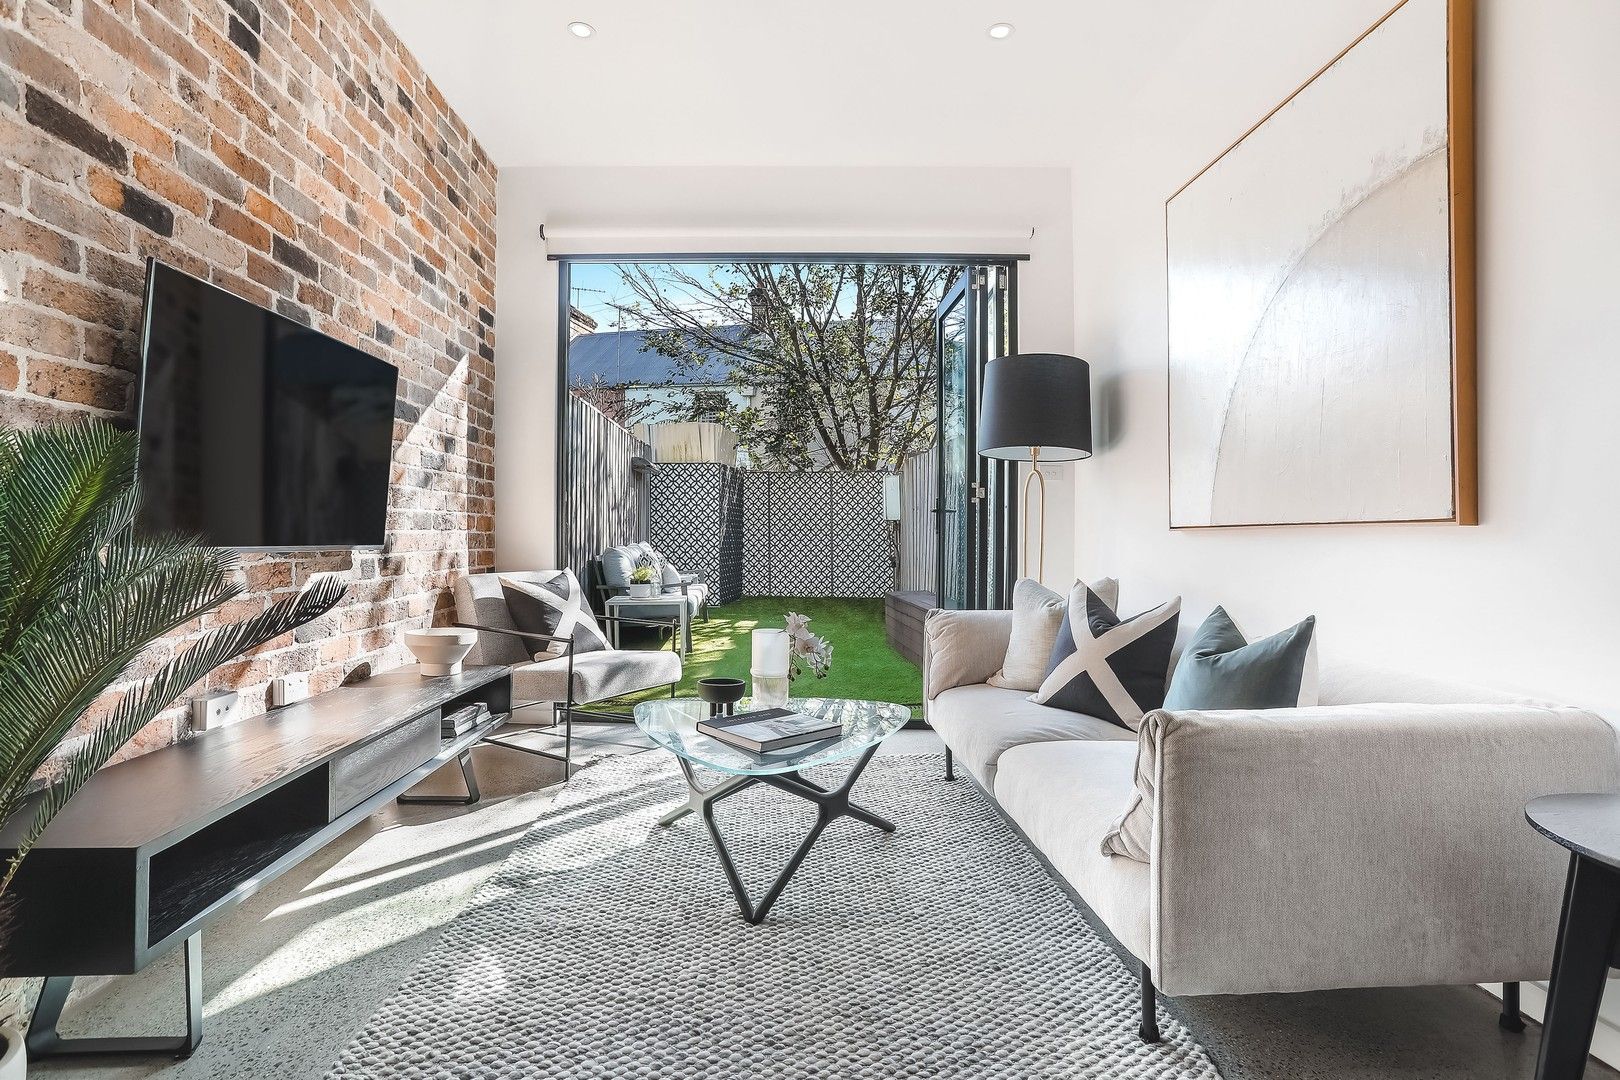 3 bedrooms House in 60 Hugo Street REDFERN NSW, 2016